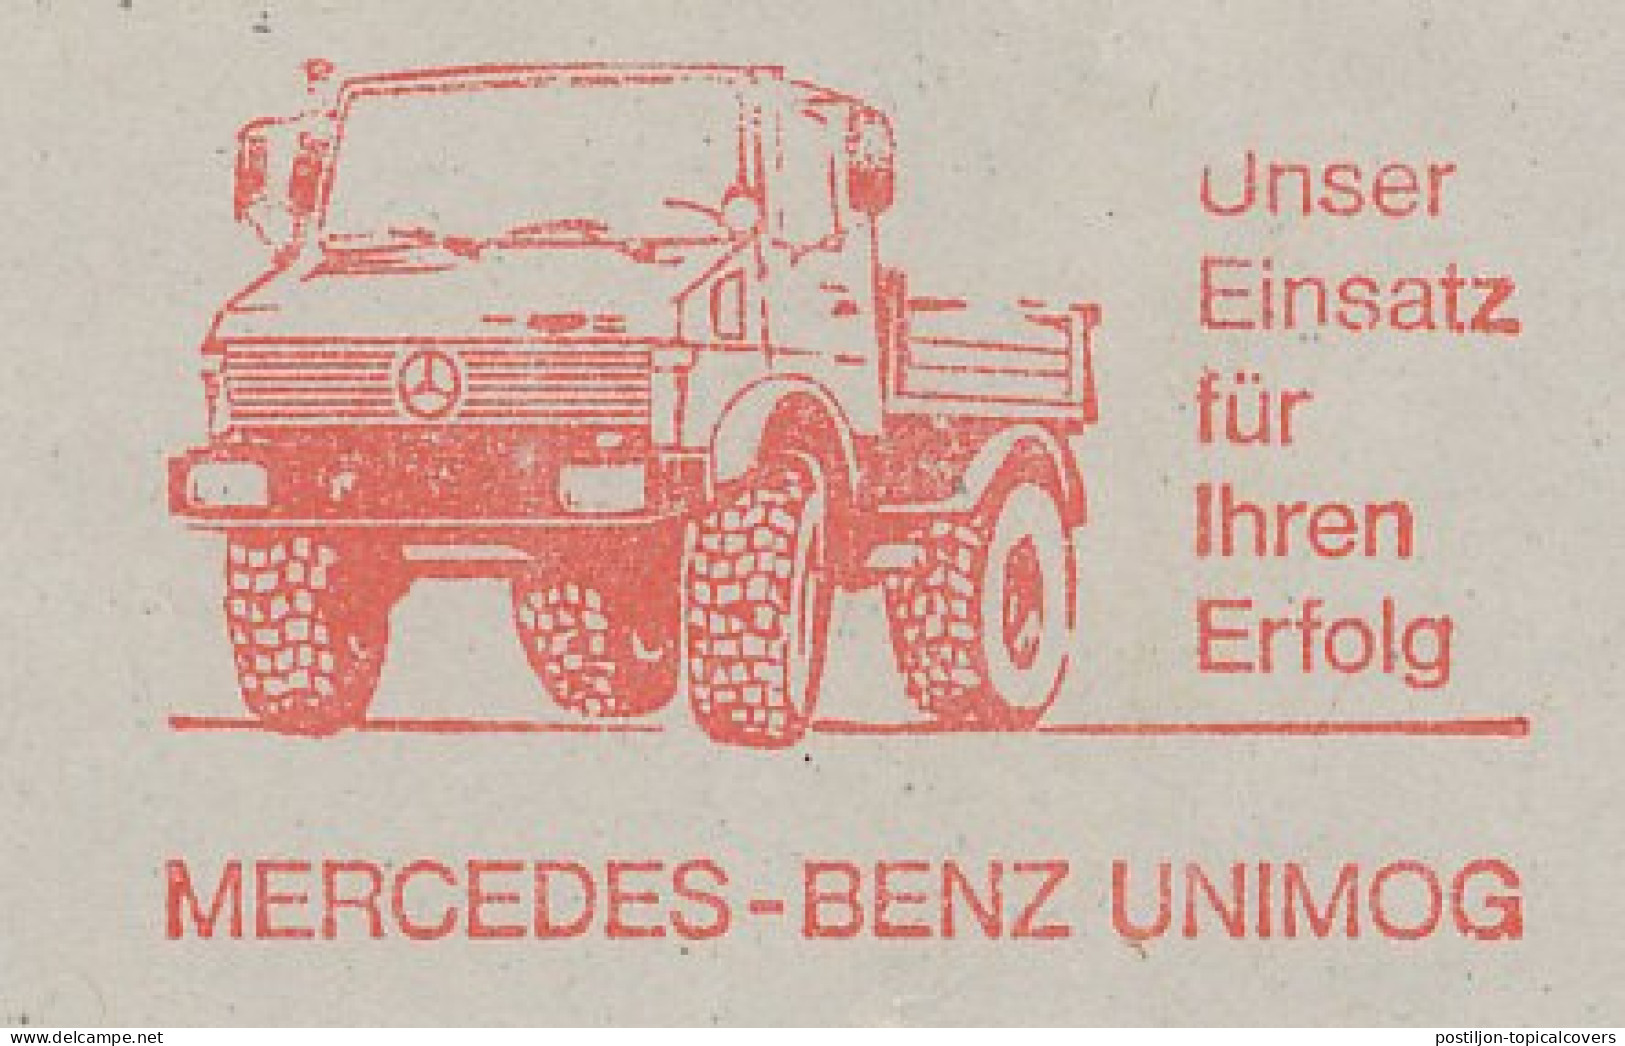 Meter Cut Germany 1996 Truck - Mercedes Benz - Trucks